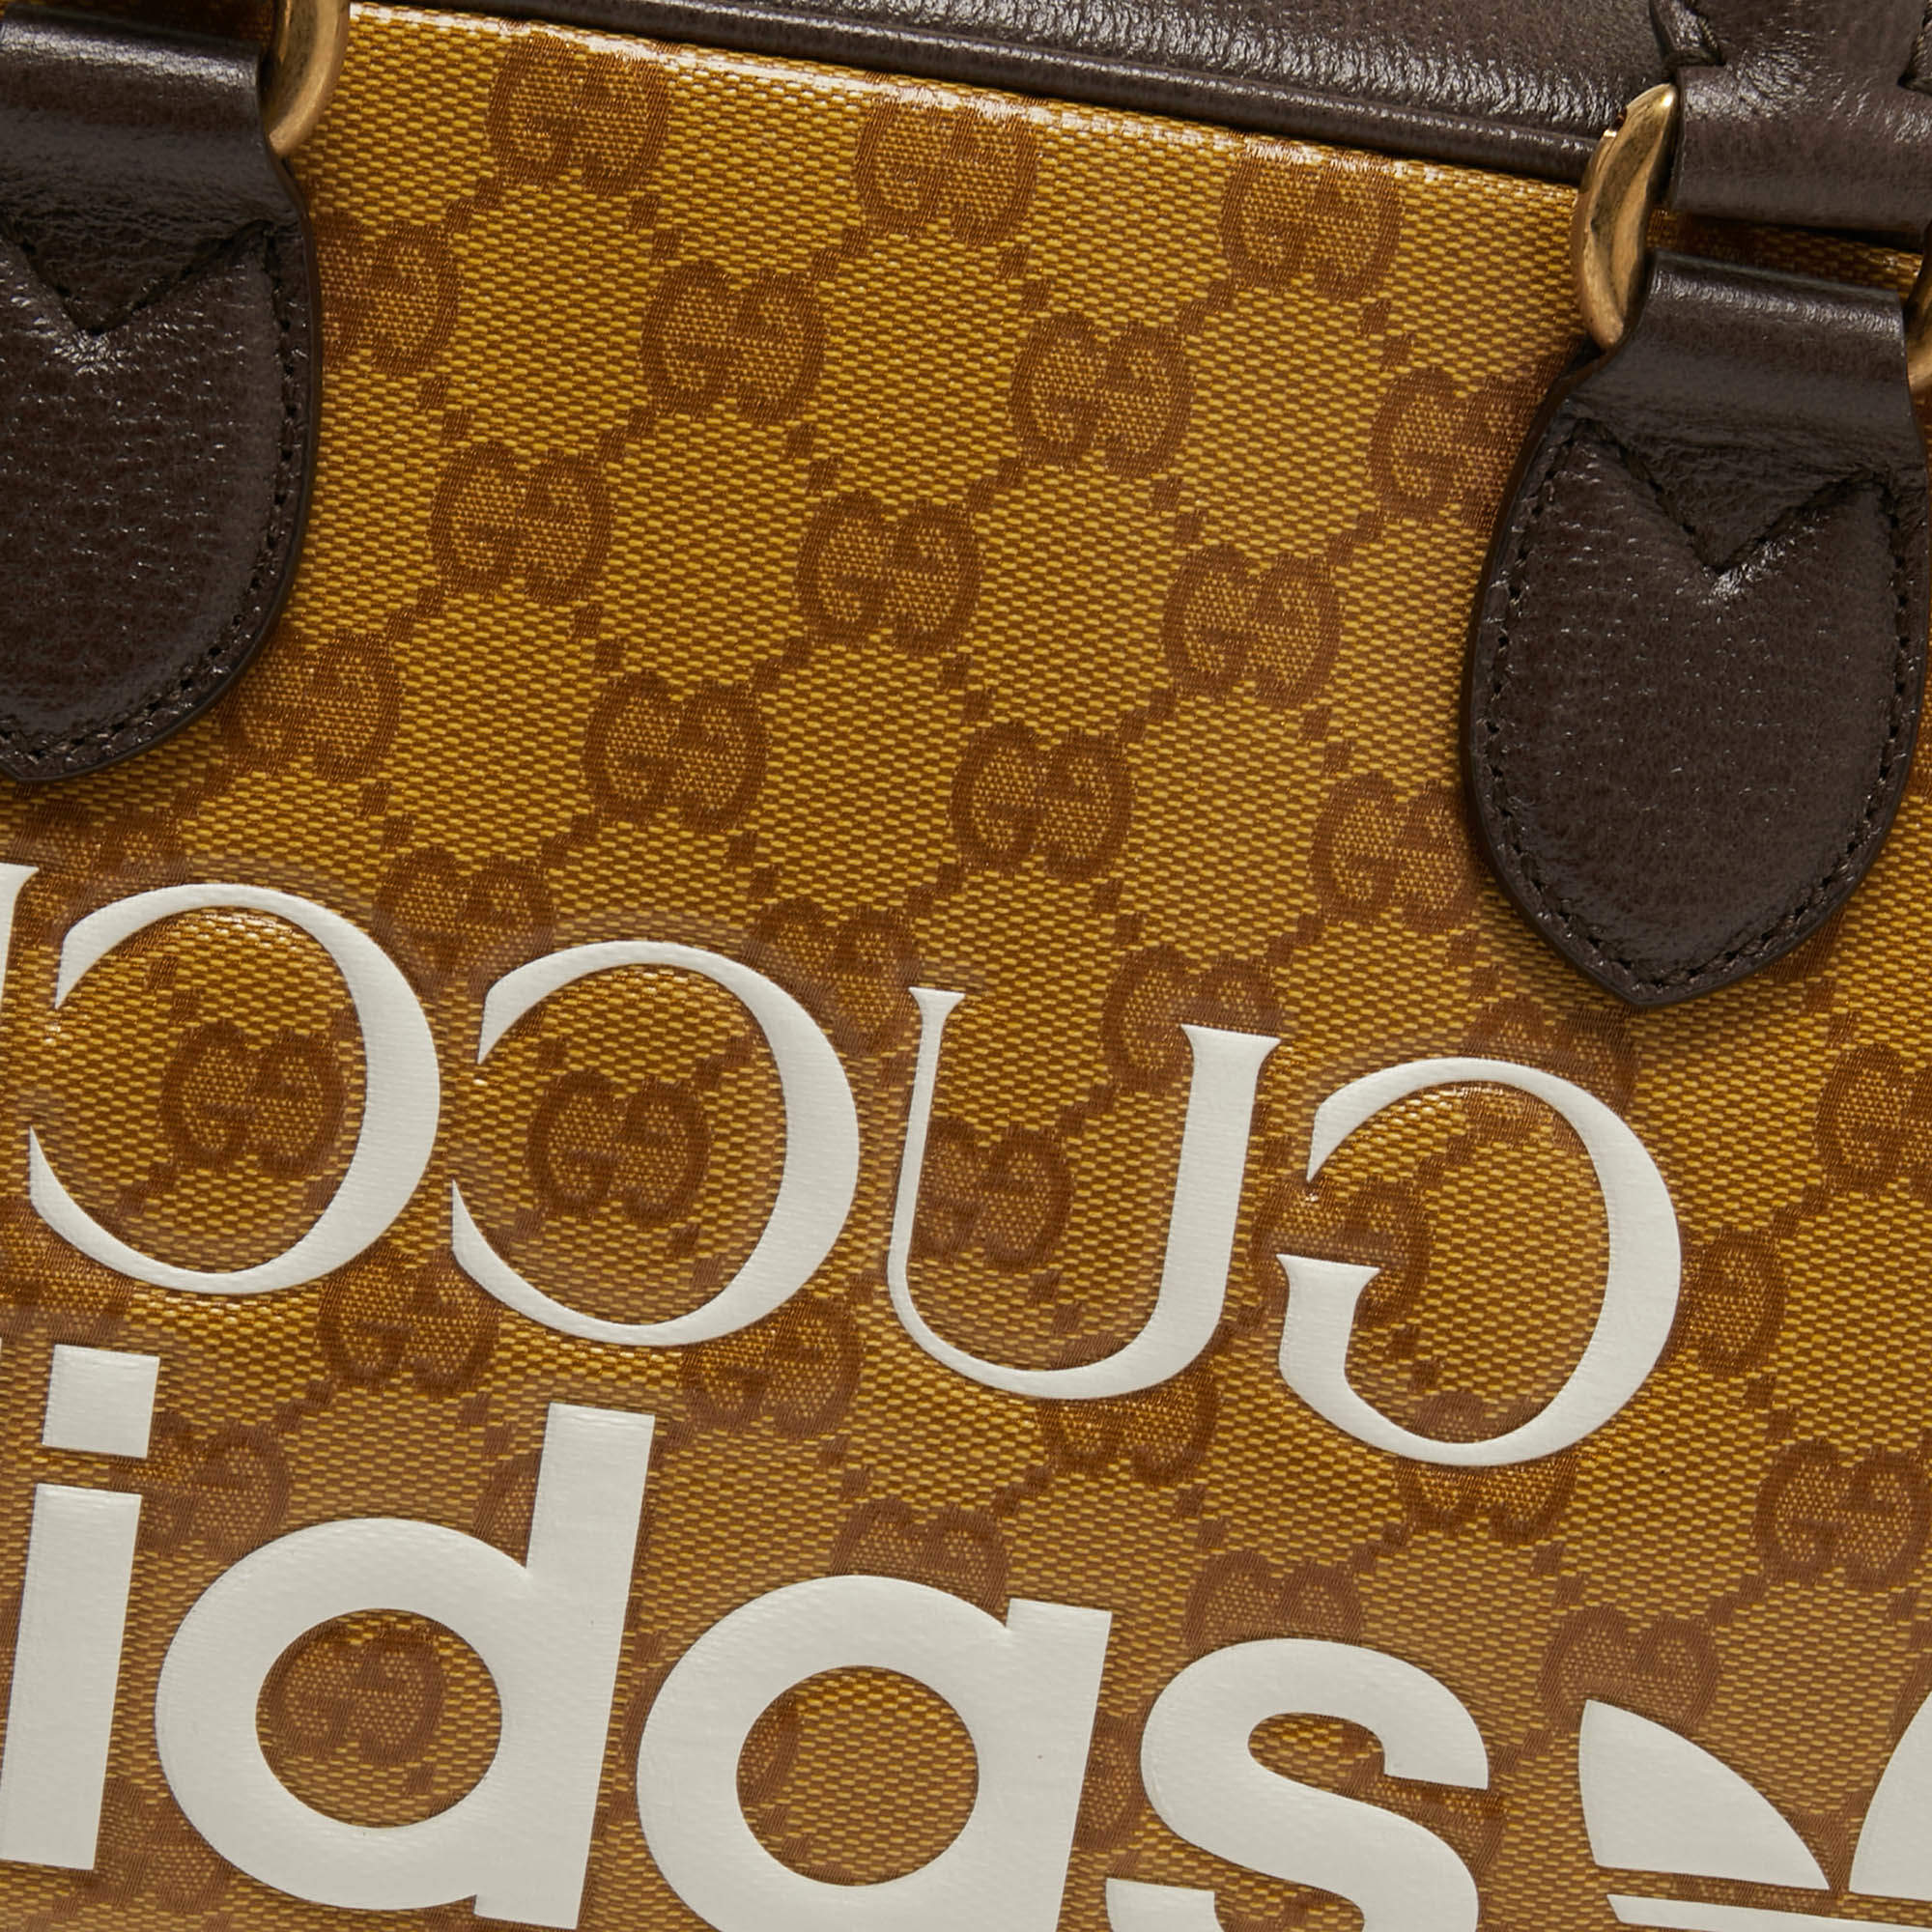 Gucci x adidas Mini Duffle Bag Beige/BrownGucci x adidas Mini Duffle Bag  Beige/Brown - OFour